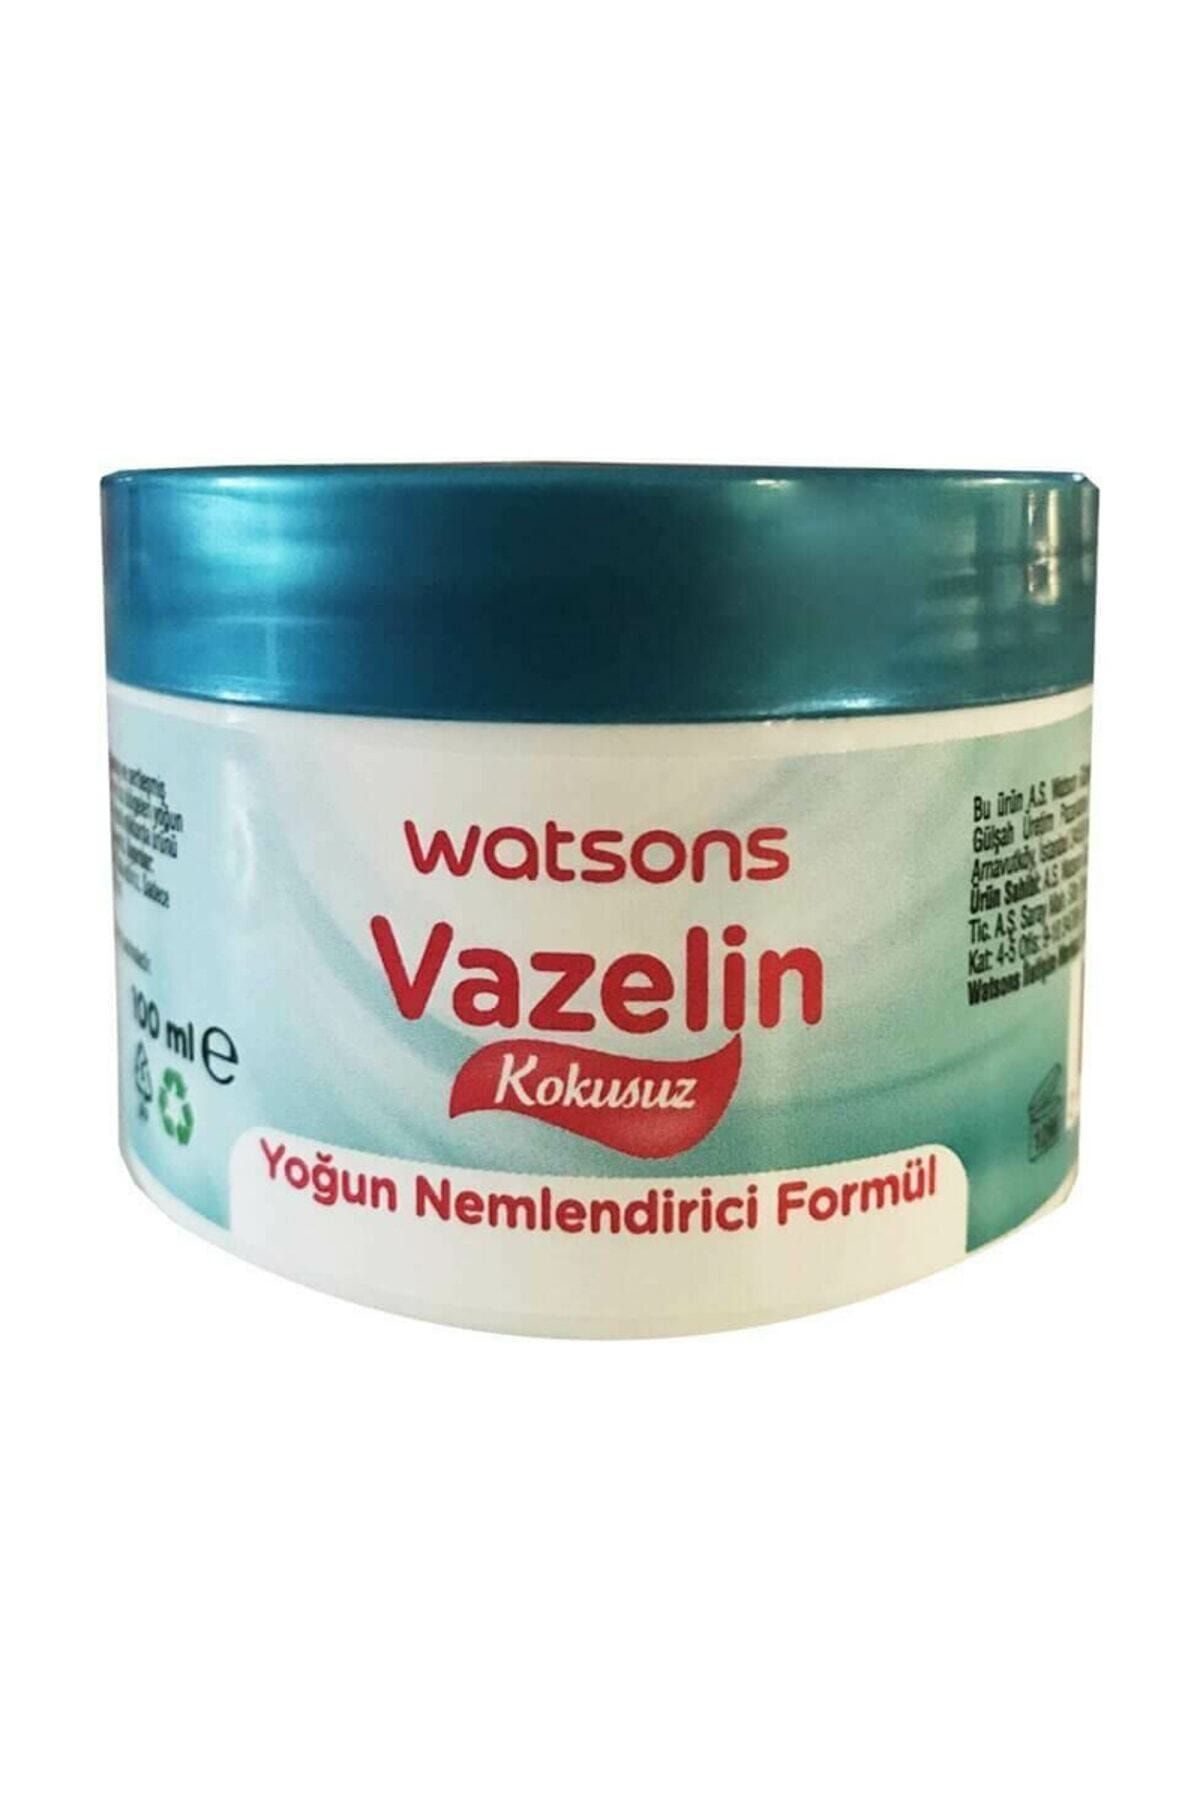 Watsons Vazelin Original 100 ml 2399900854317